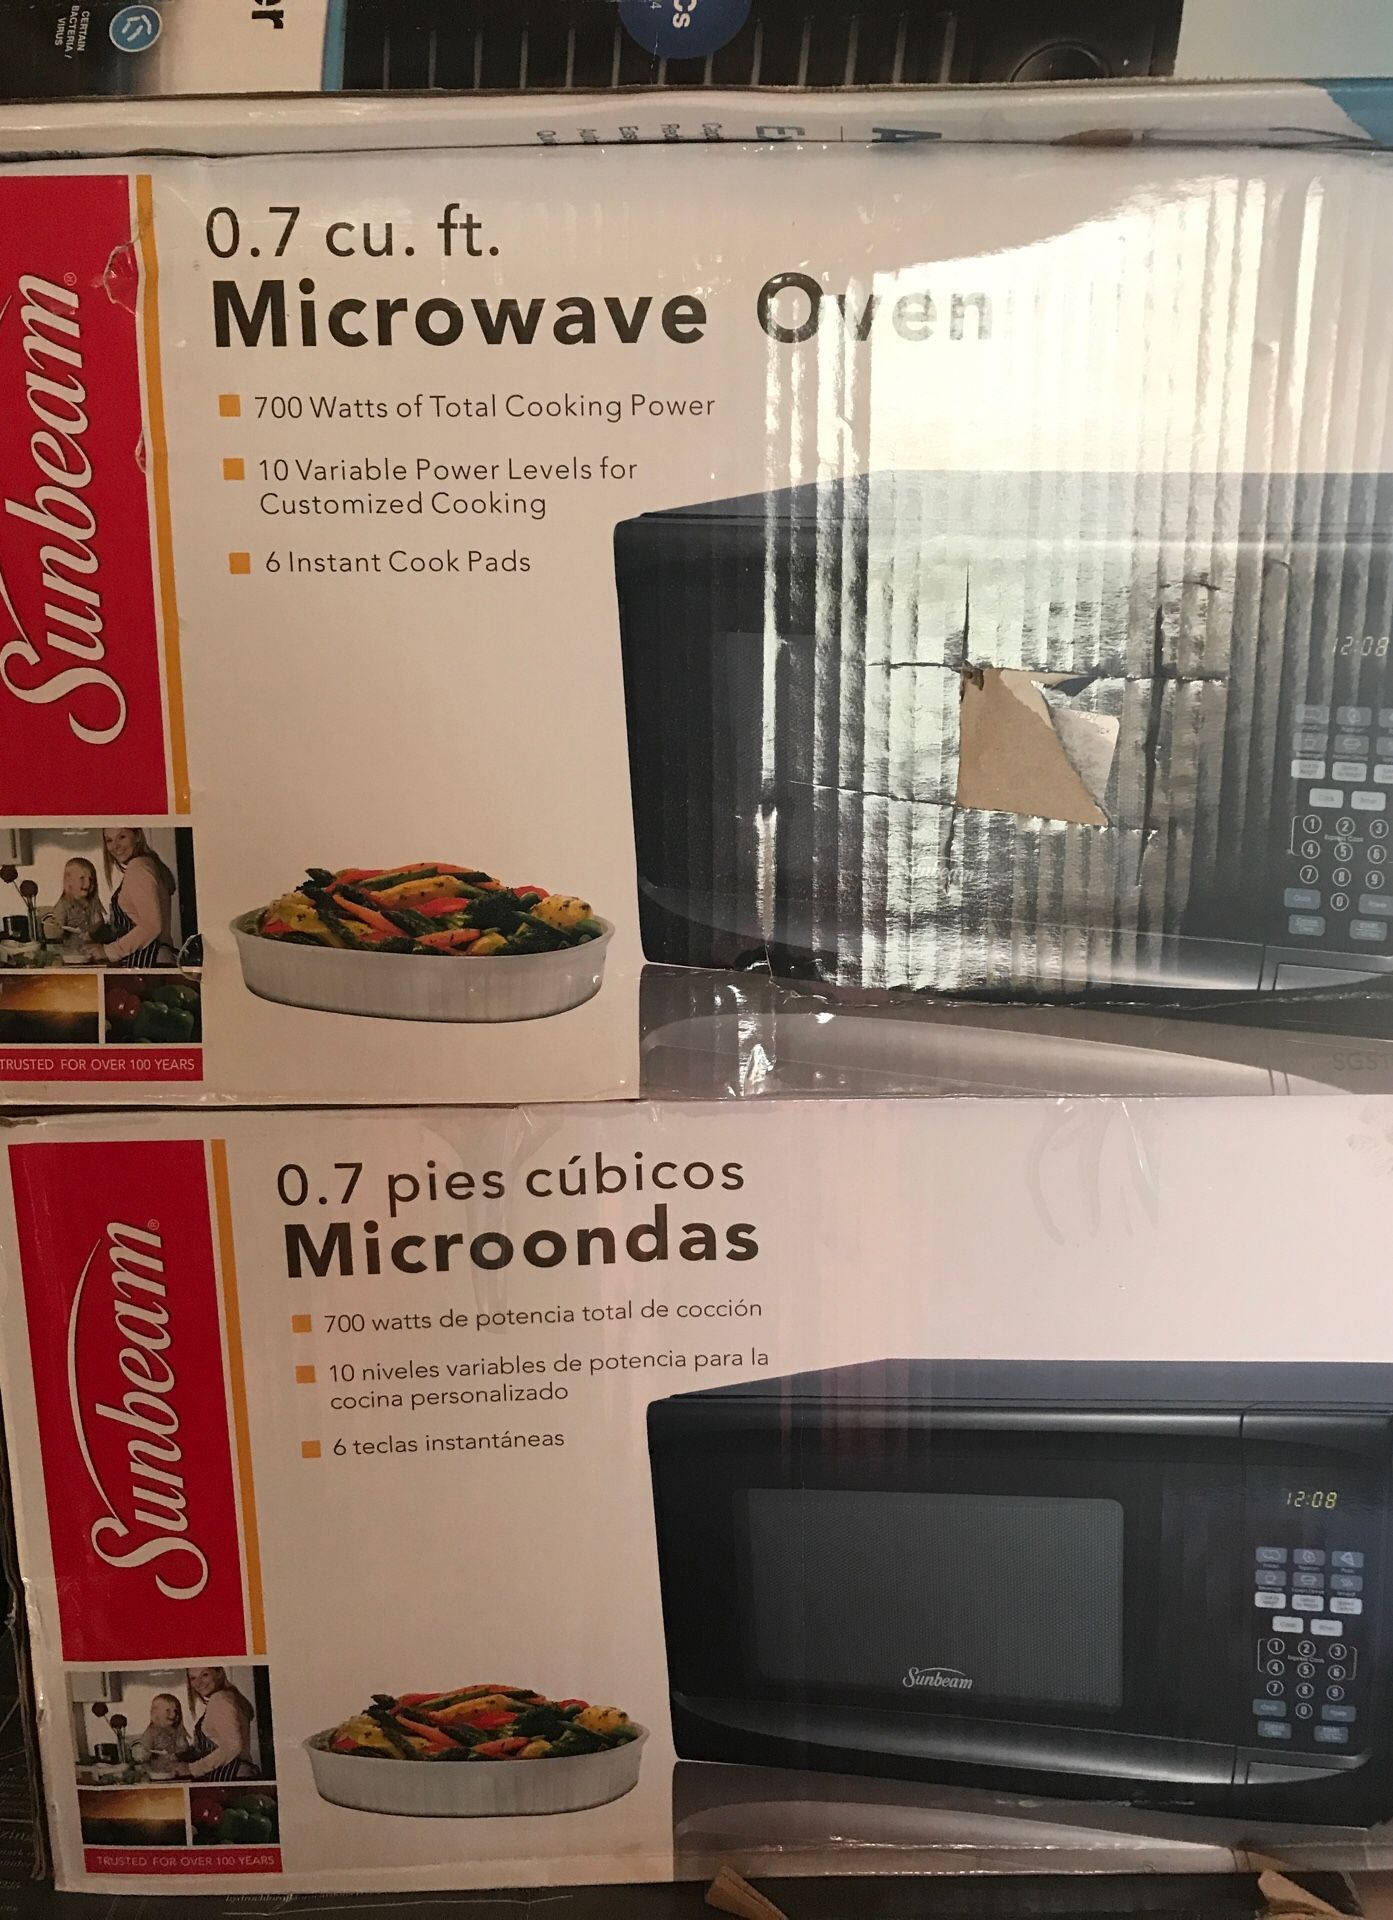 New microwave